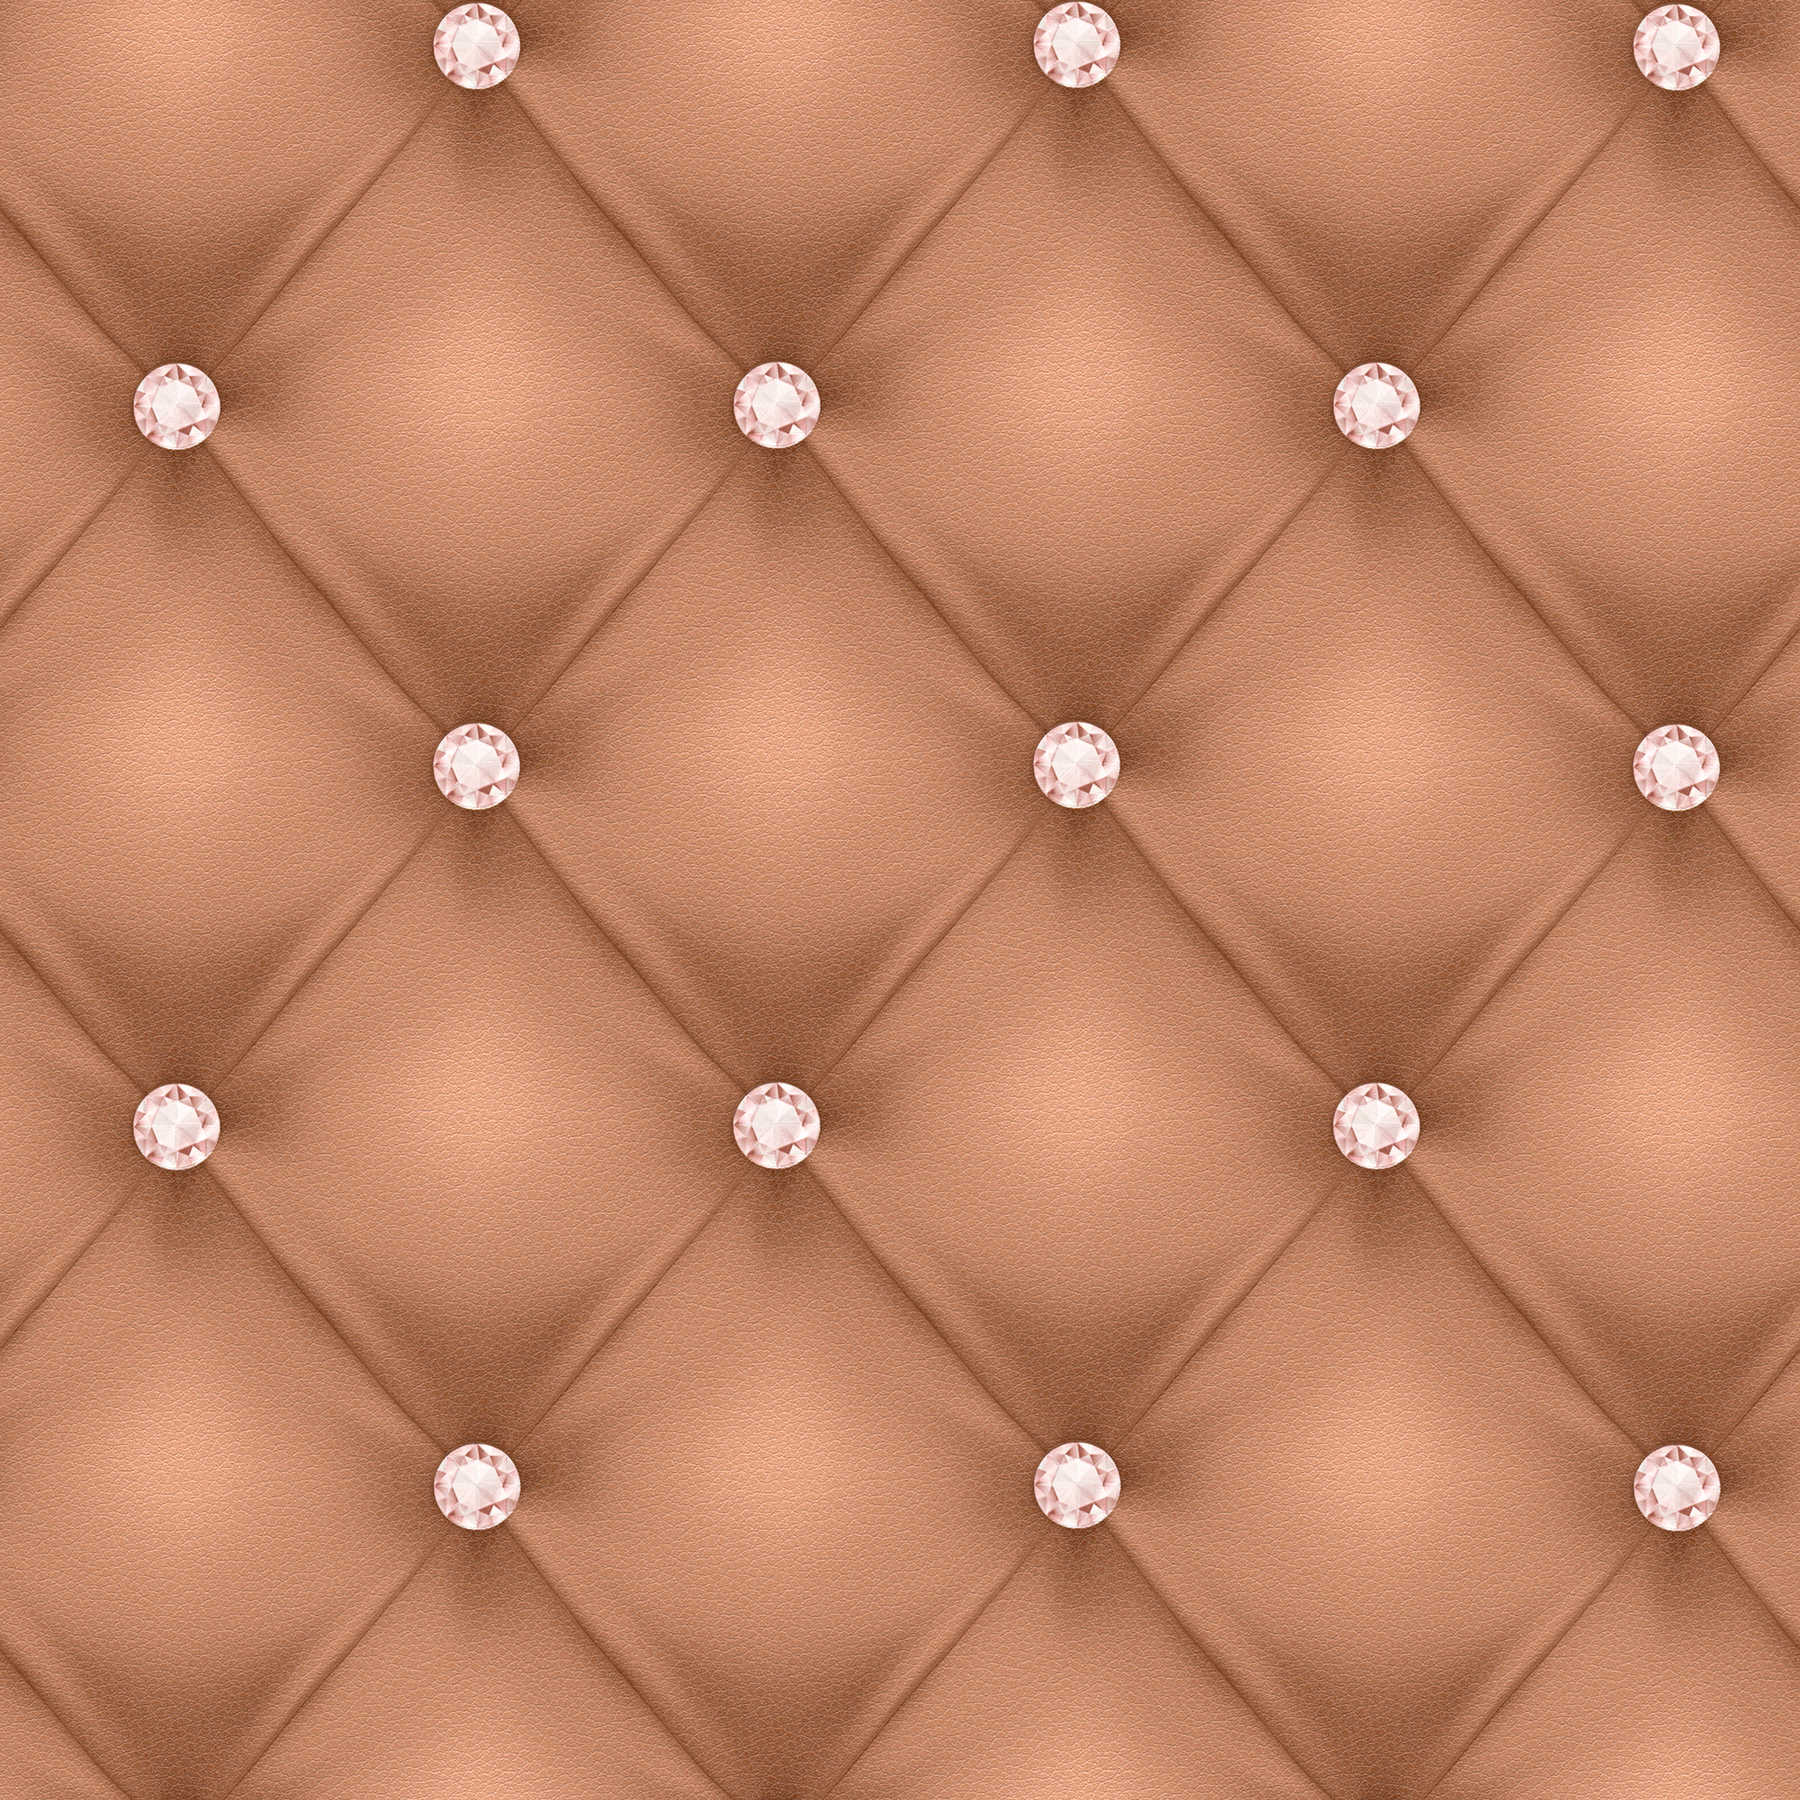         Non-woven wallpaper copper cushion with diamonds - metallic
    